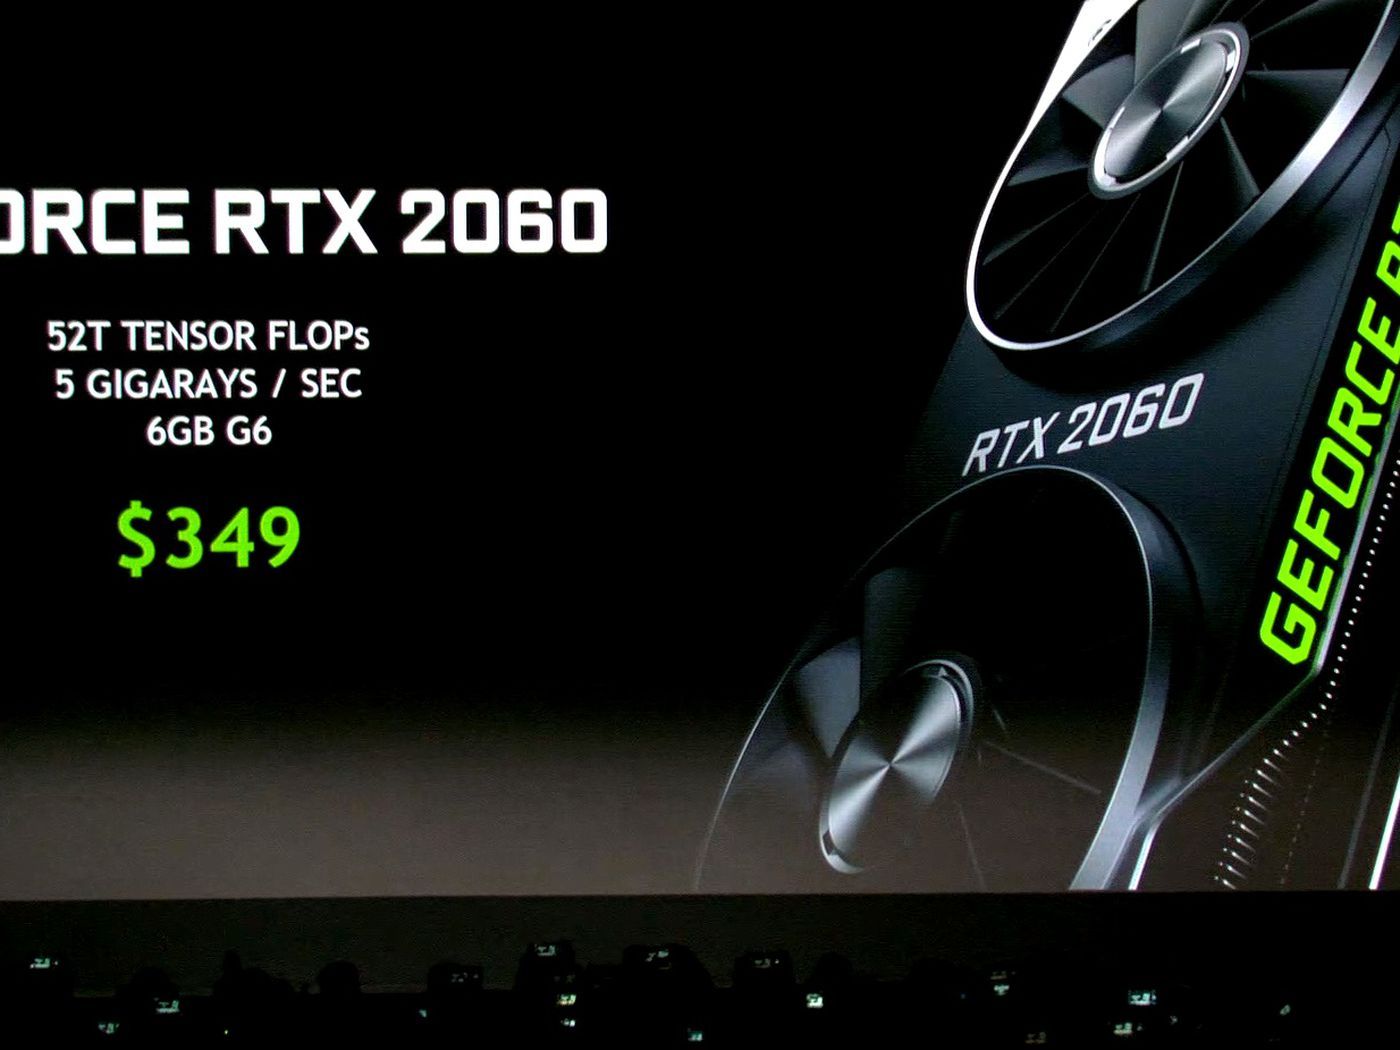 Nvidia Announces Mid Tier RTX 2060 GPU For $349